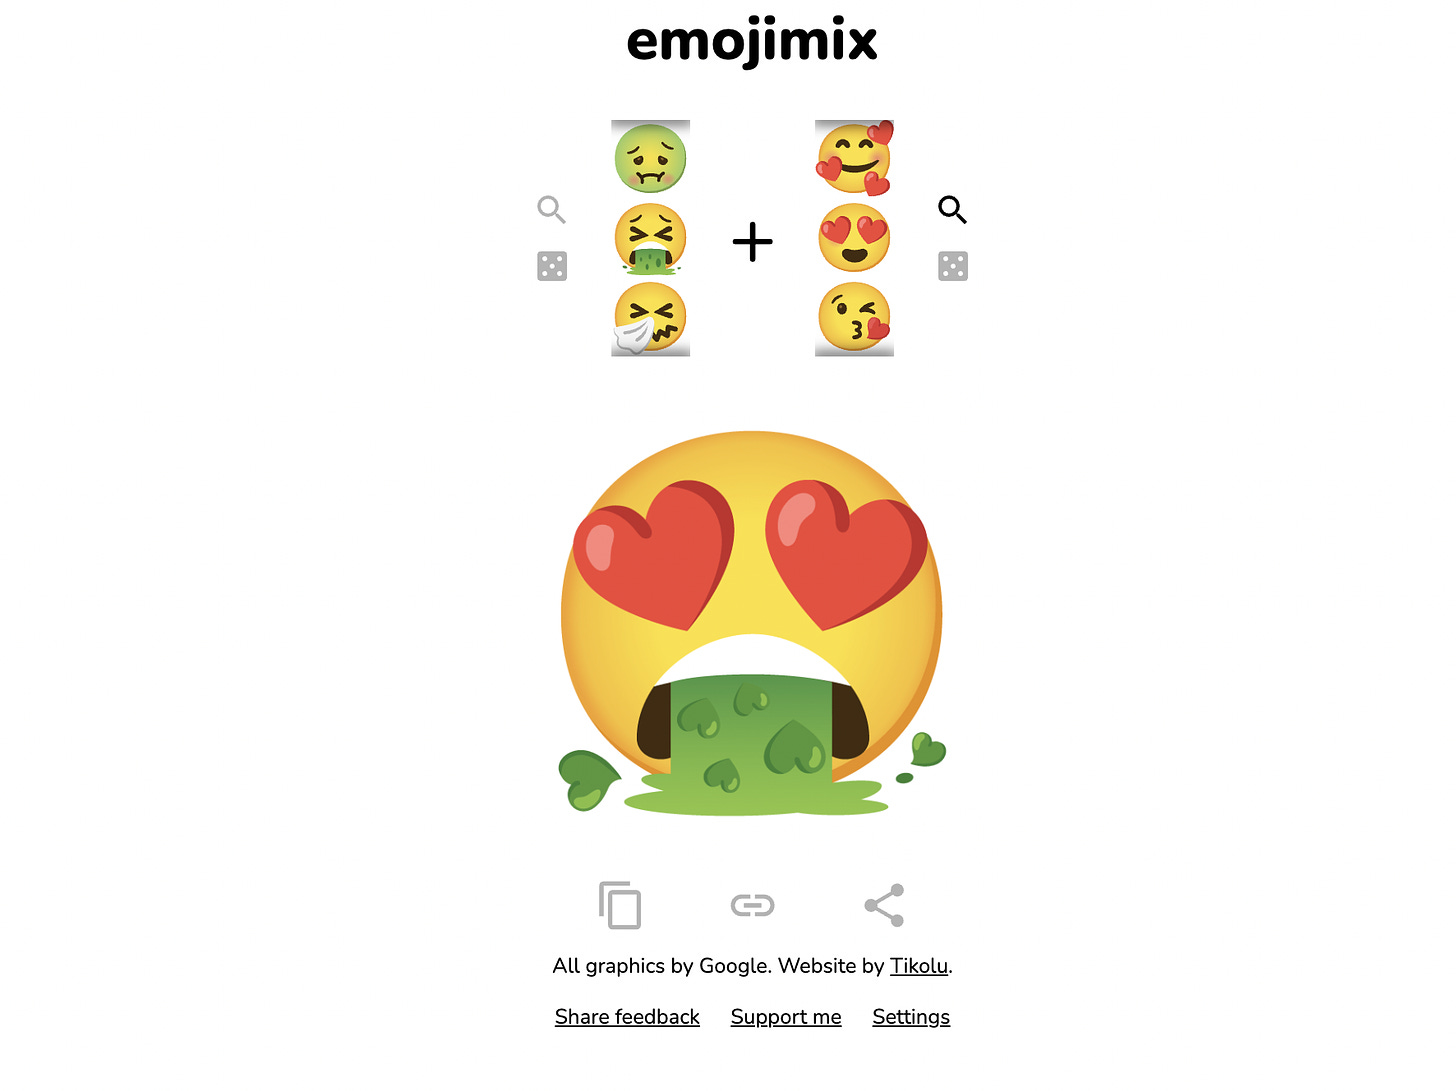 emojimix webiste screenshot